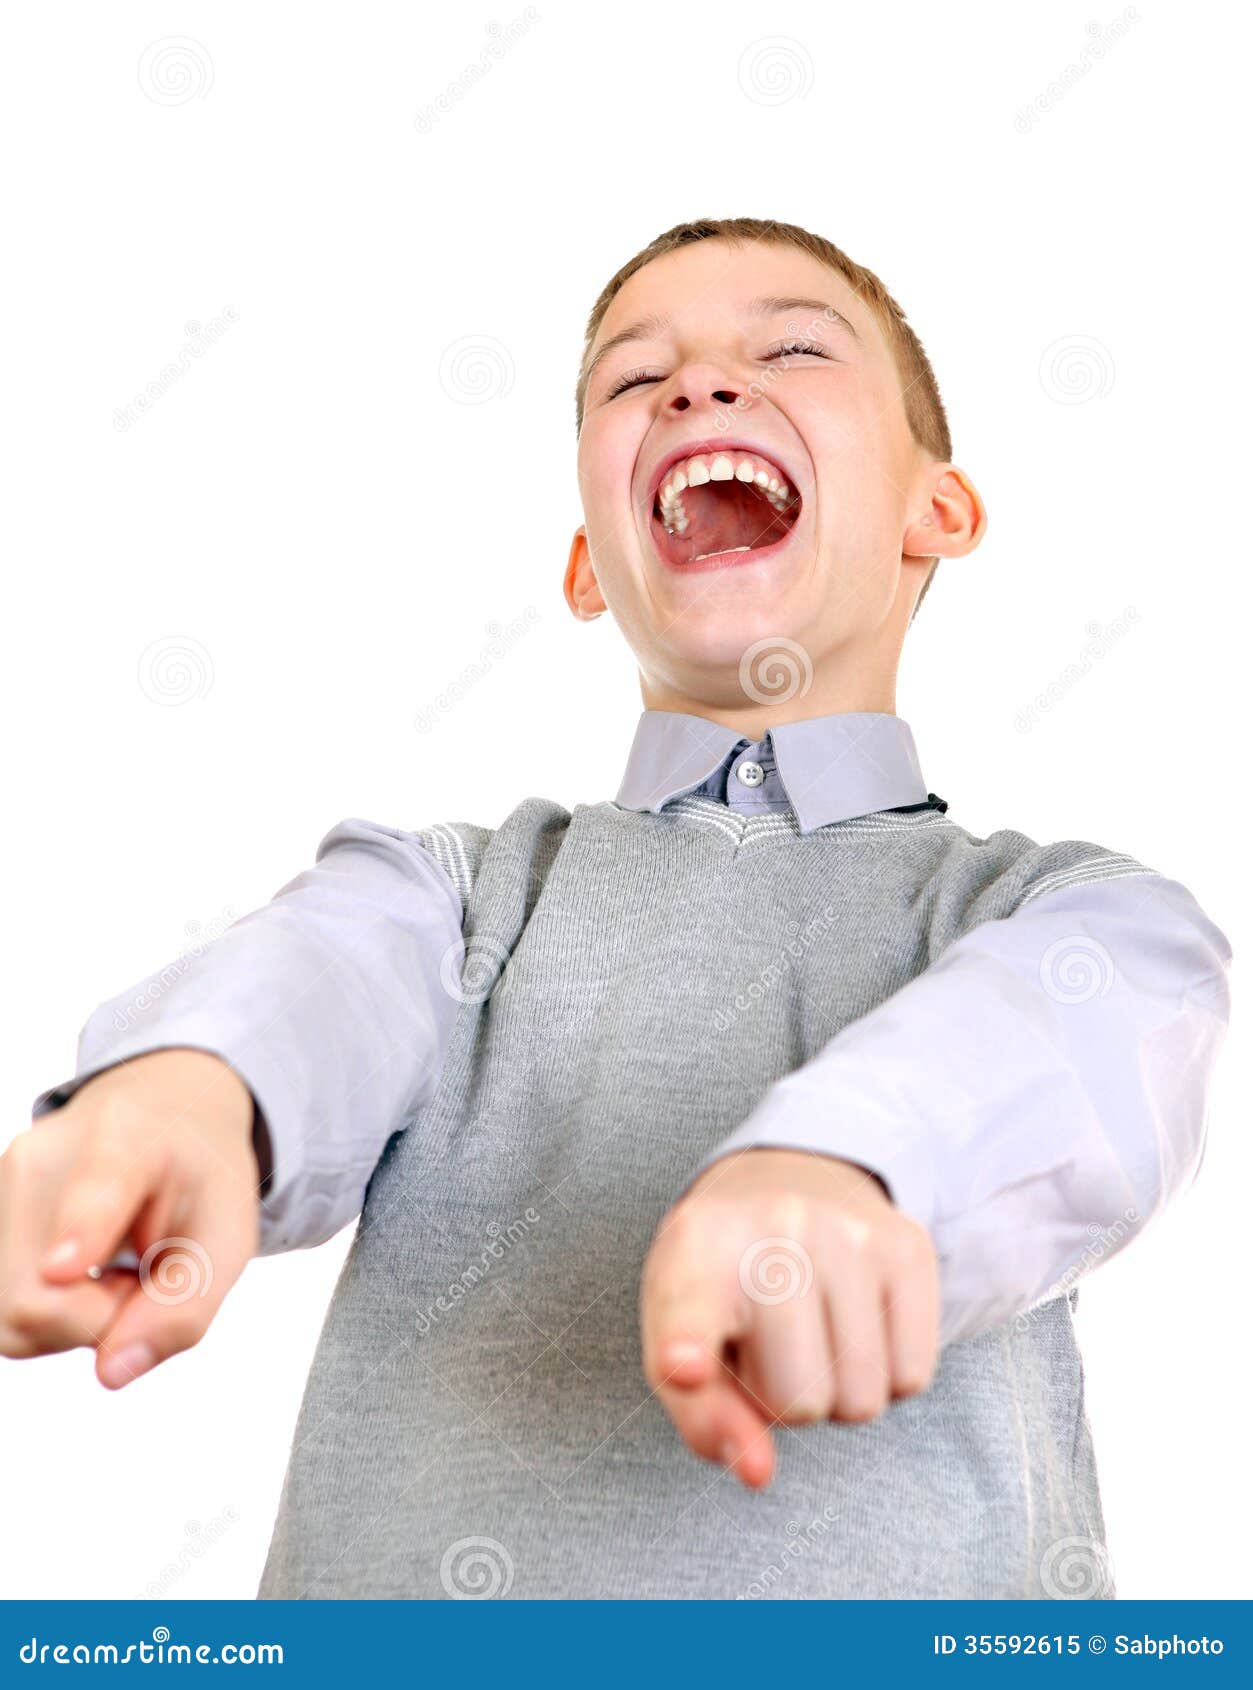 little boy laughing meme